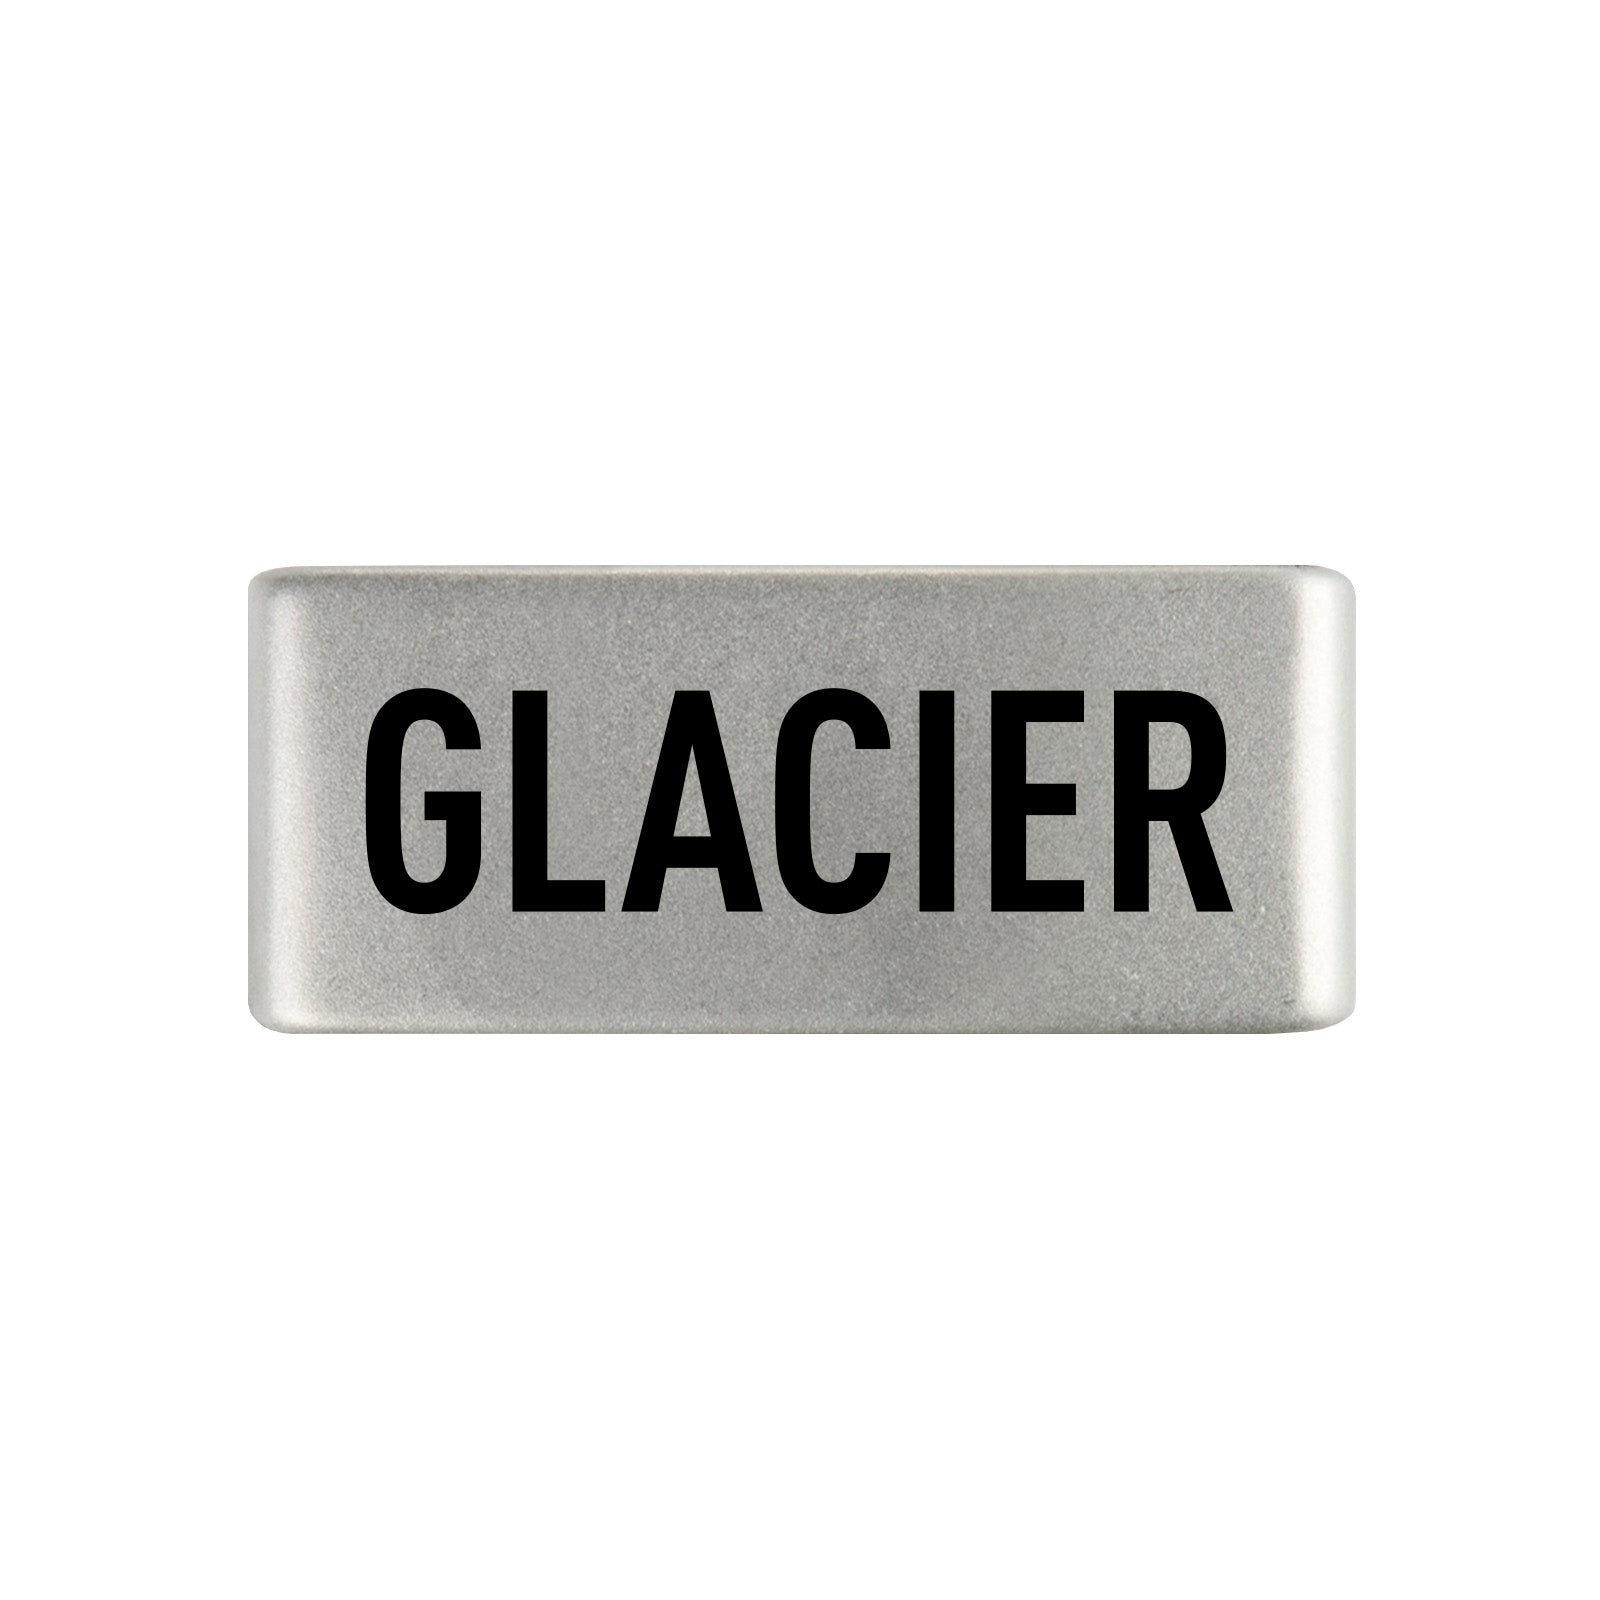 Glacier Badge Badge 13mm - ROAD iD